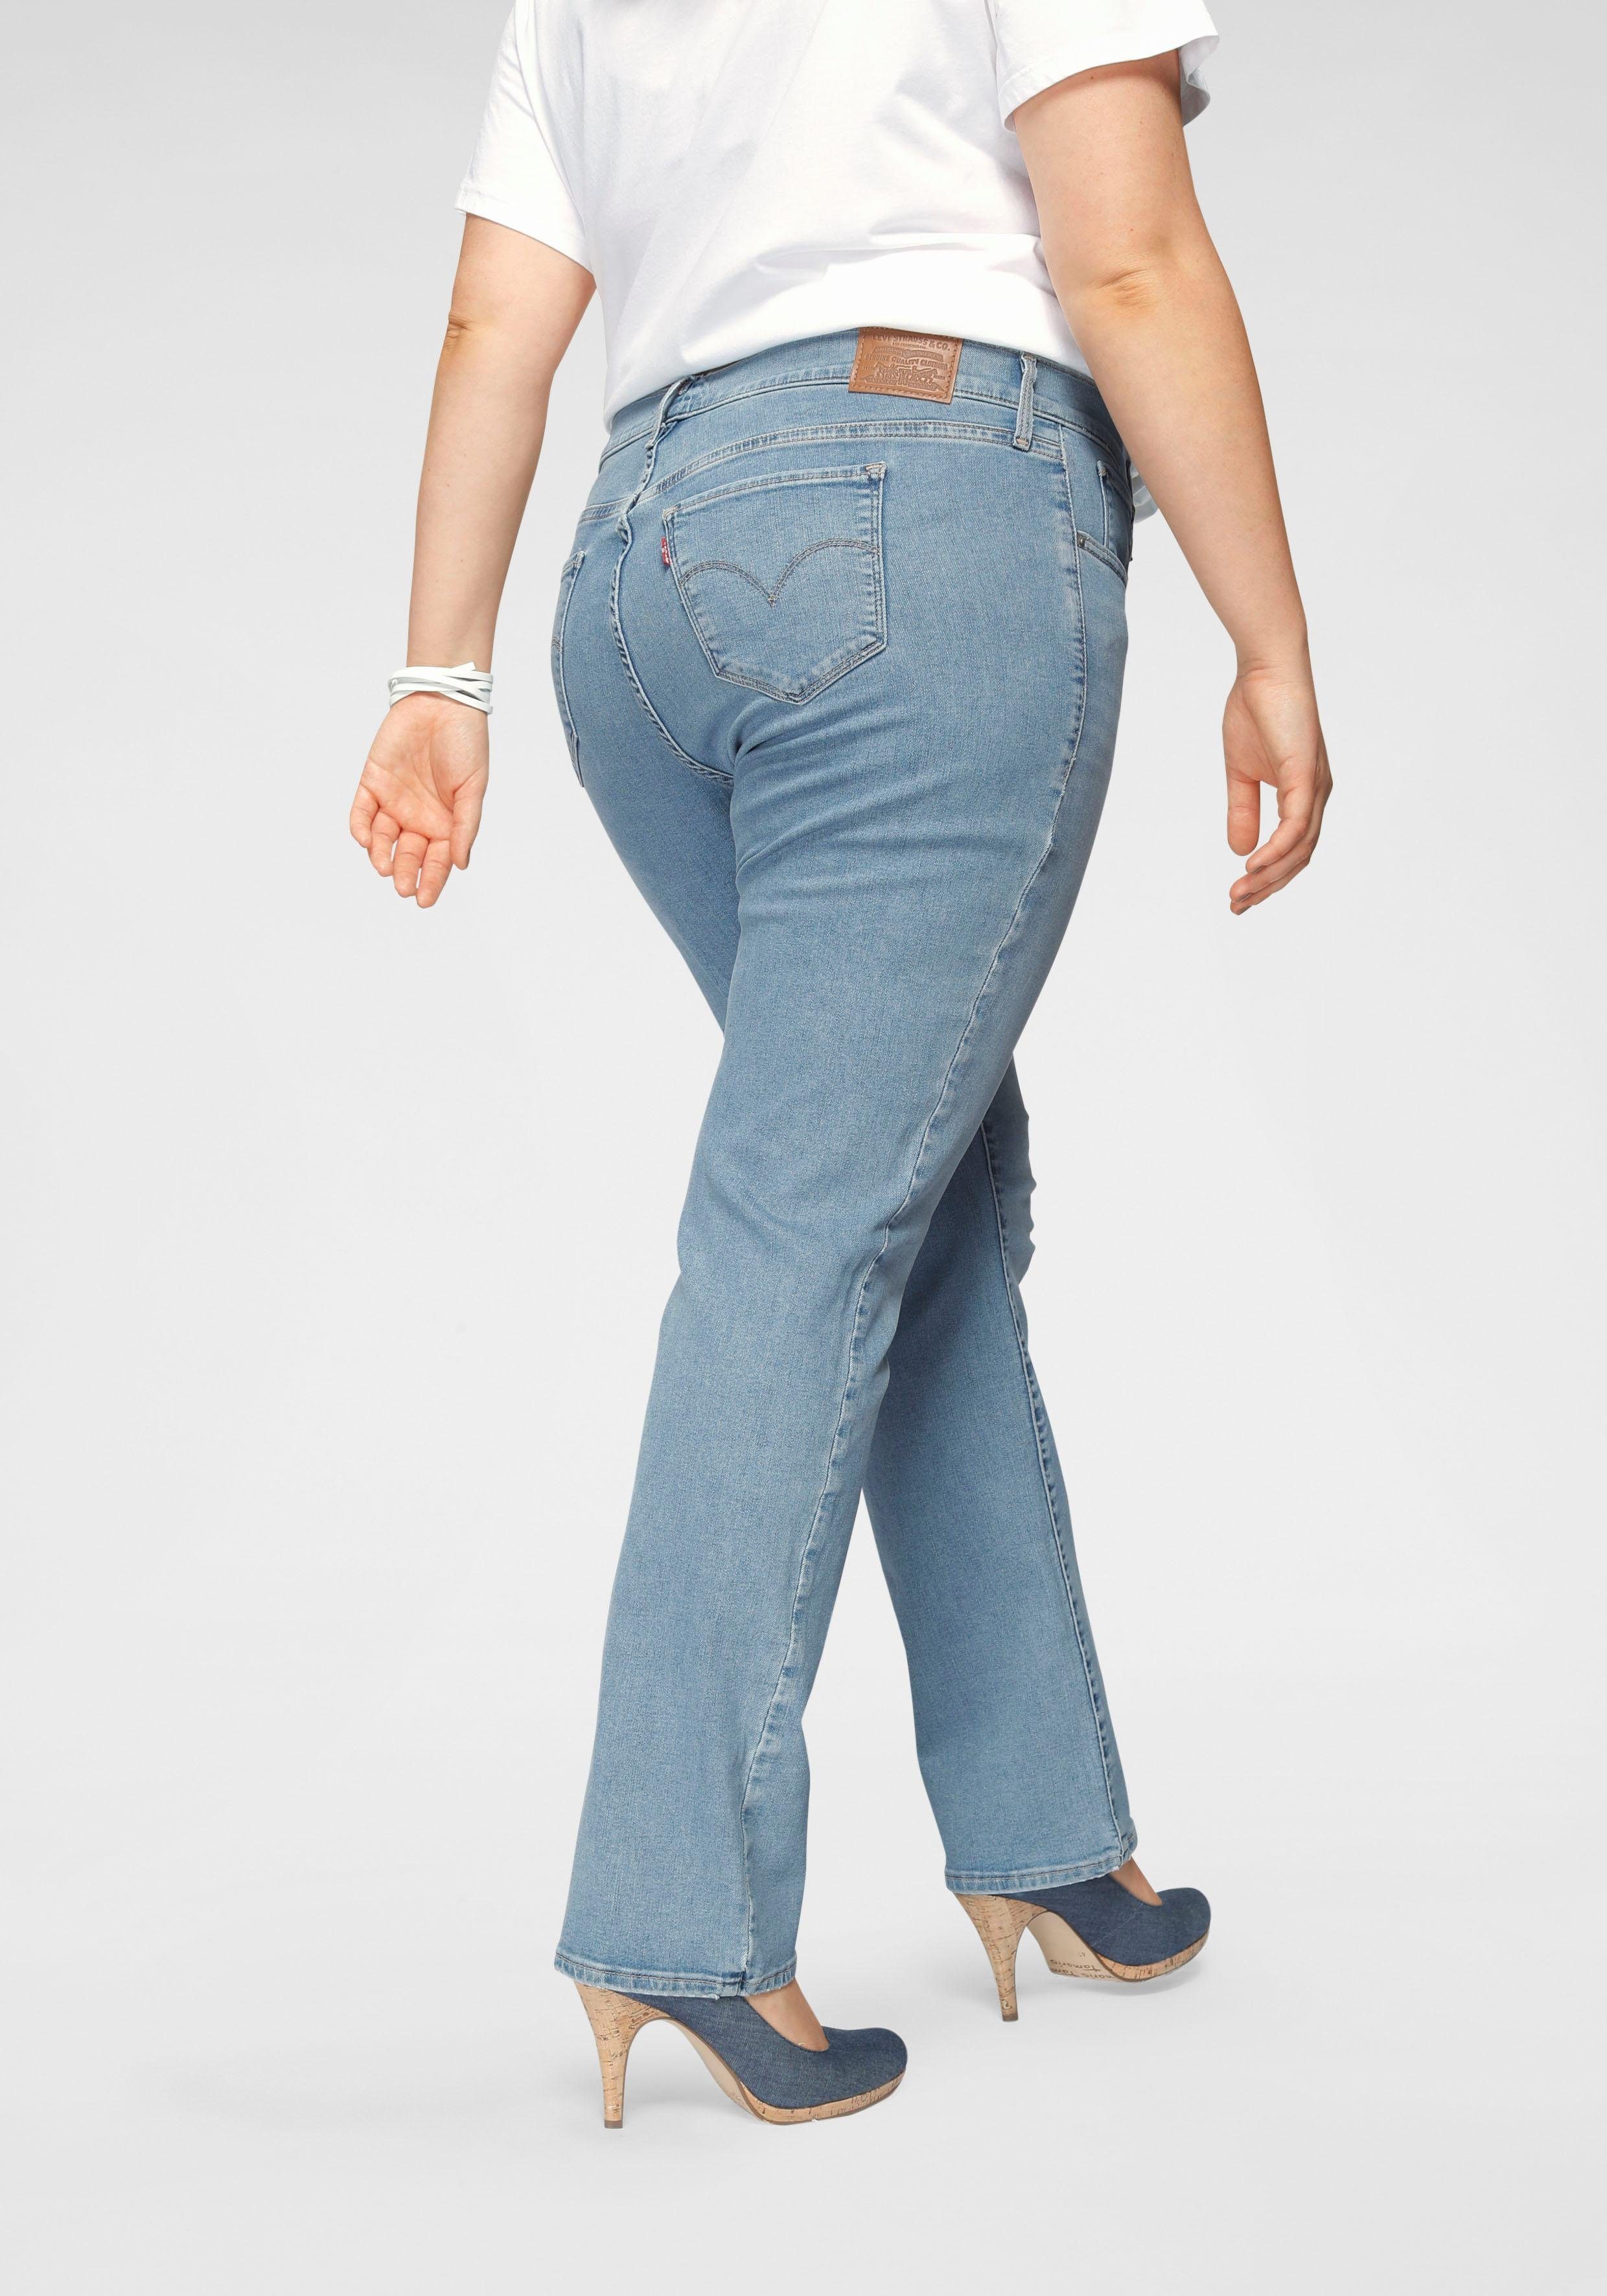 Hesaplanabilir Sil Sanatçı levi's damen jeans 314 straight fit -  interieur-debuchy.com